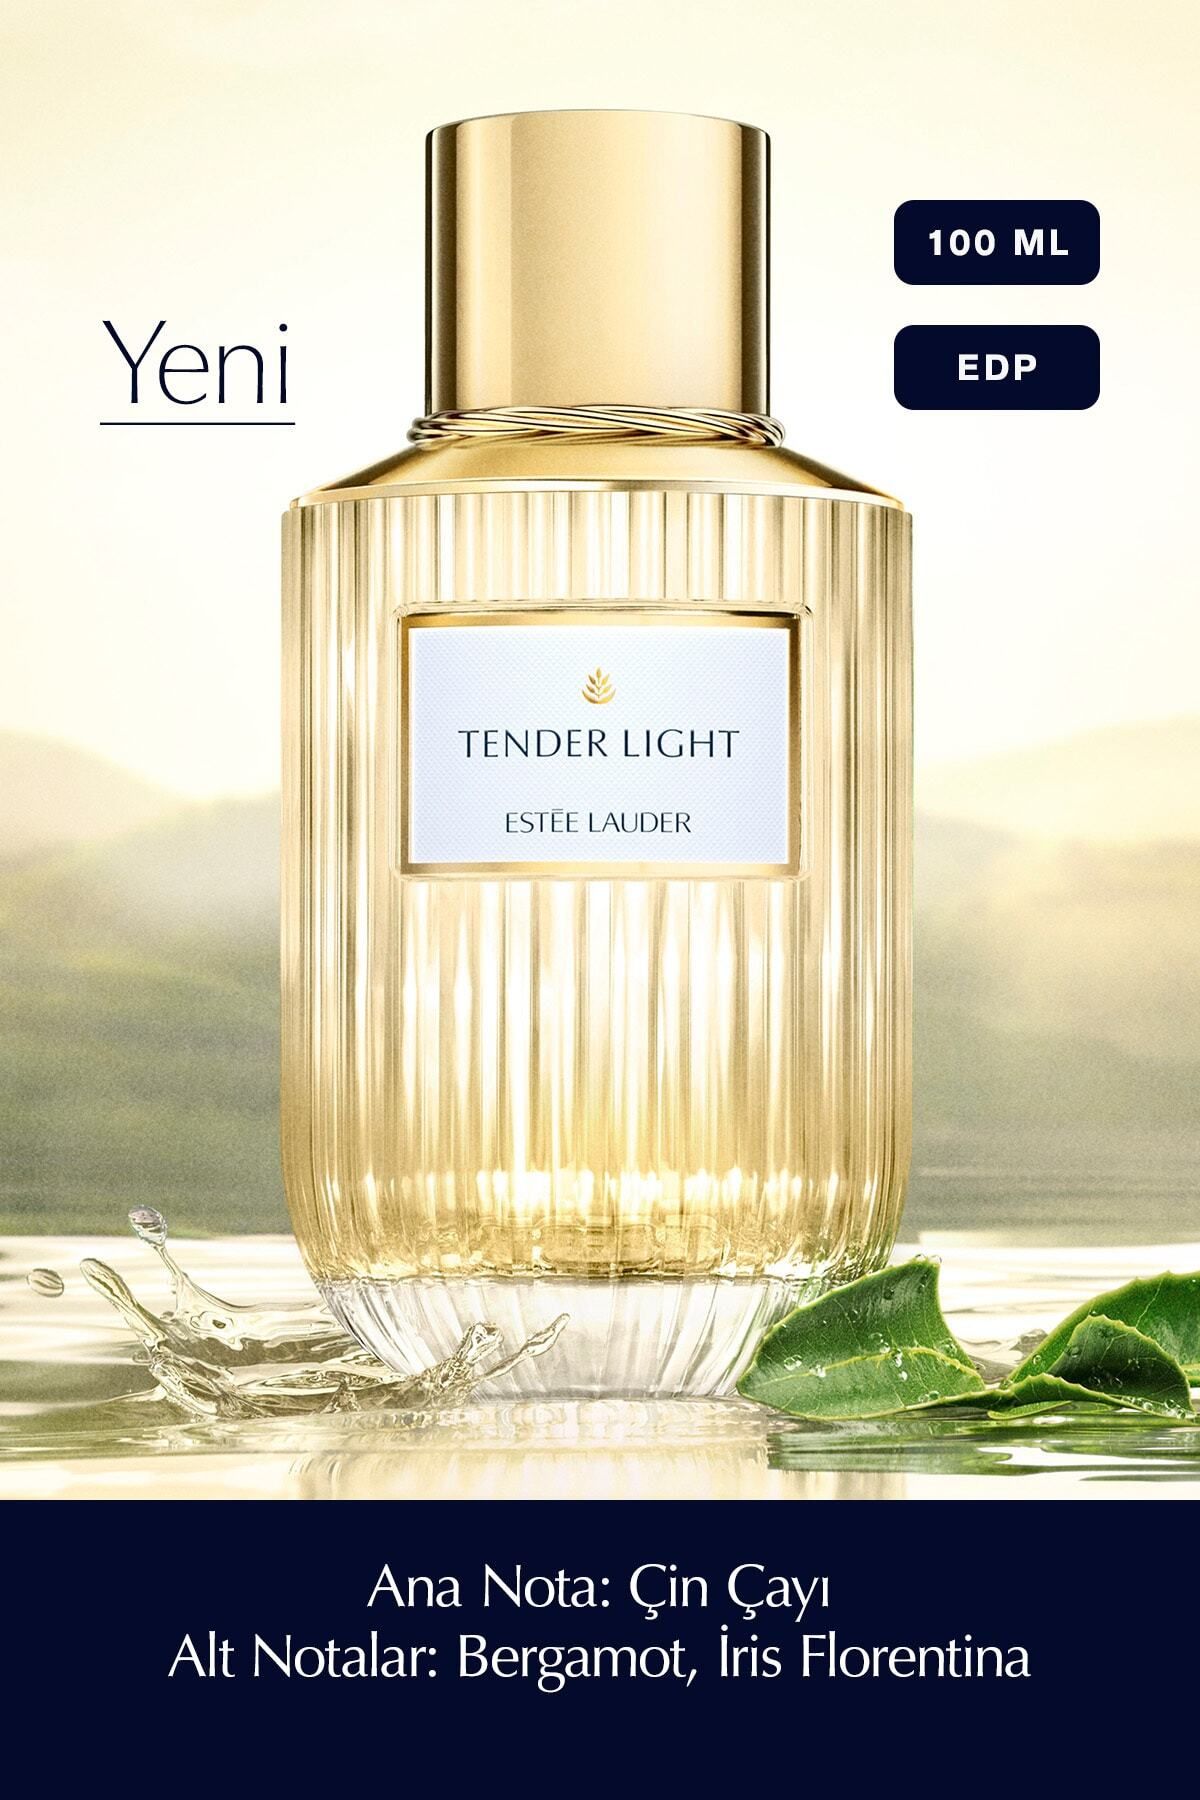 Estee Lauder Tender Light - ادوپرفیوم 100 Ml عطر زنانه مجموعه عطرهای لوکس …parfüm_0158